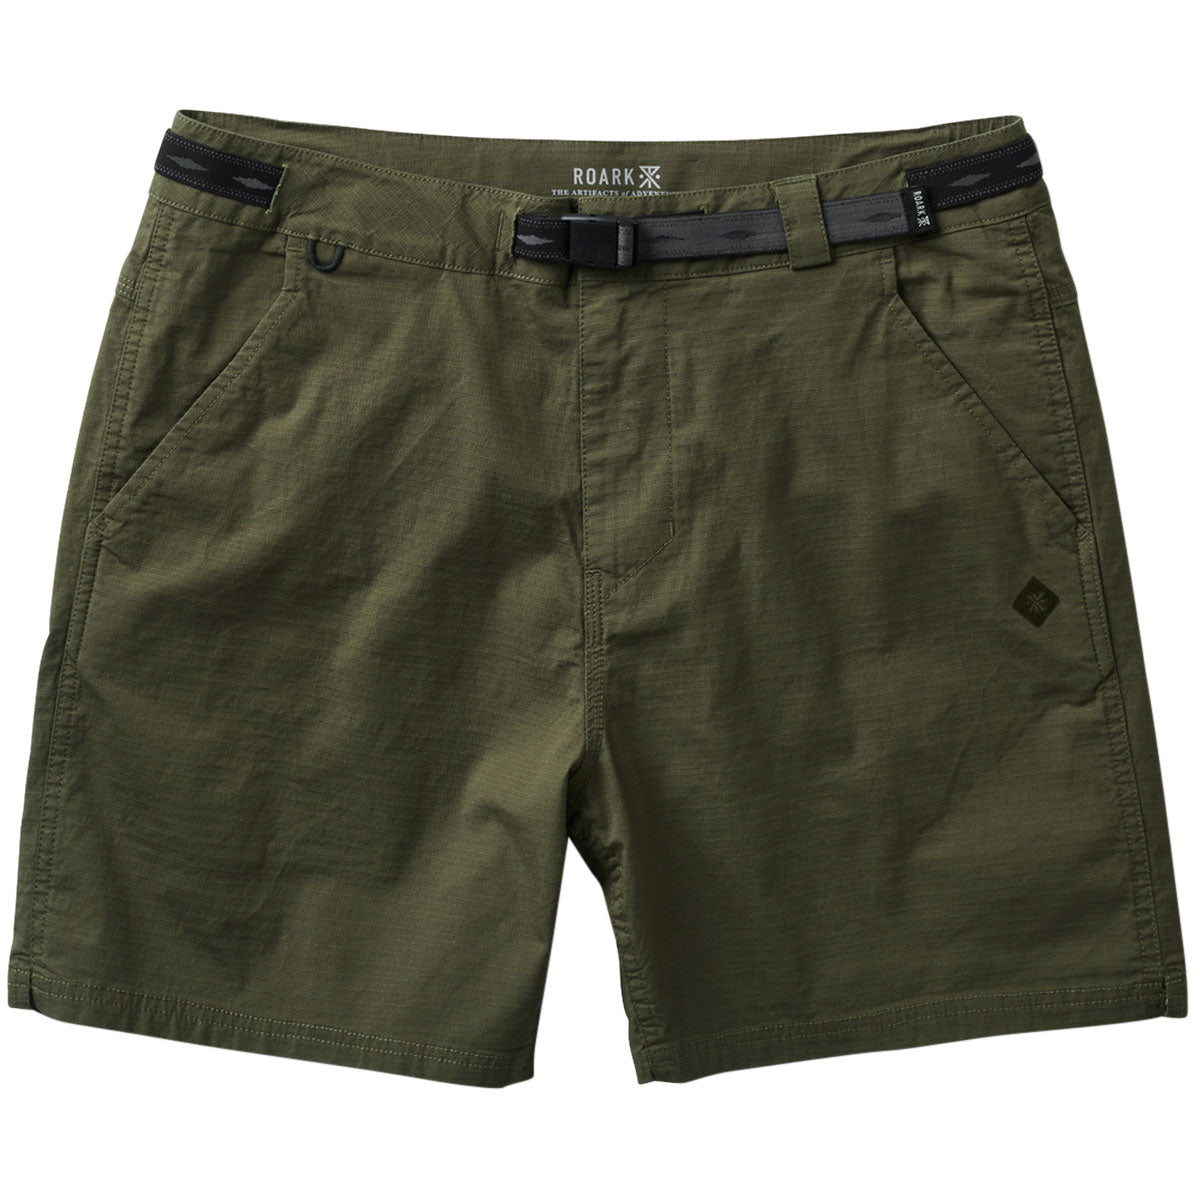 Roark Campover Shorts - Military image 1